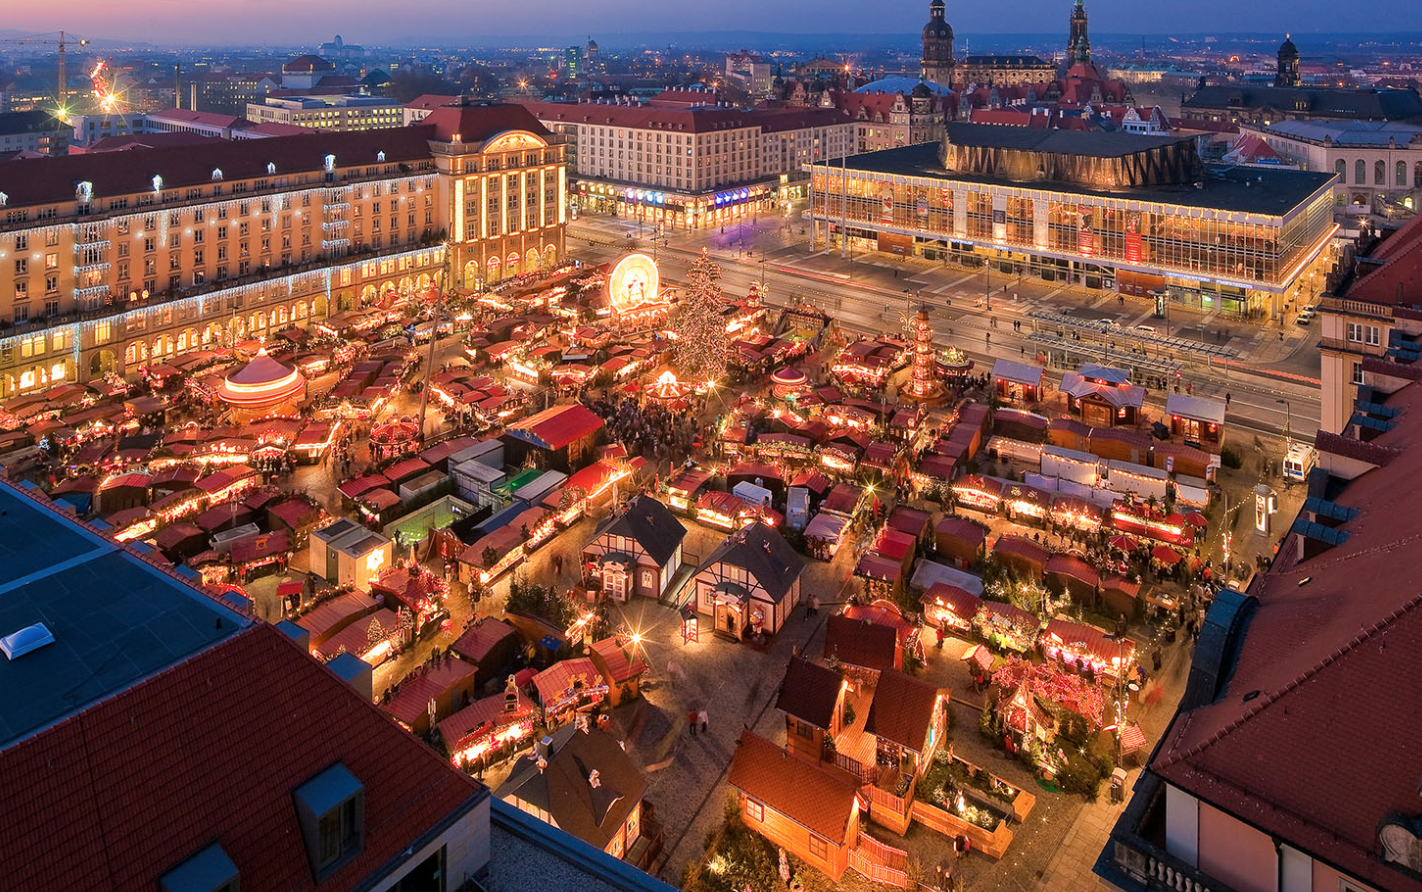 Seasons Greetings From Striezelmarkt: The German Christmas Market